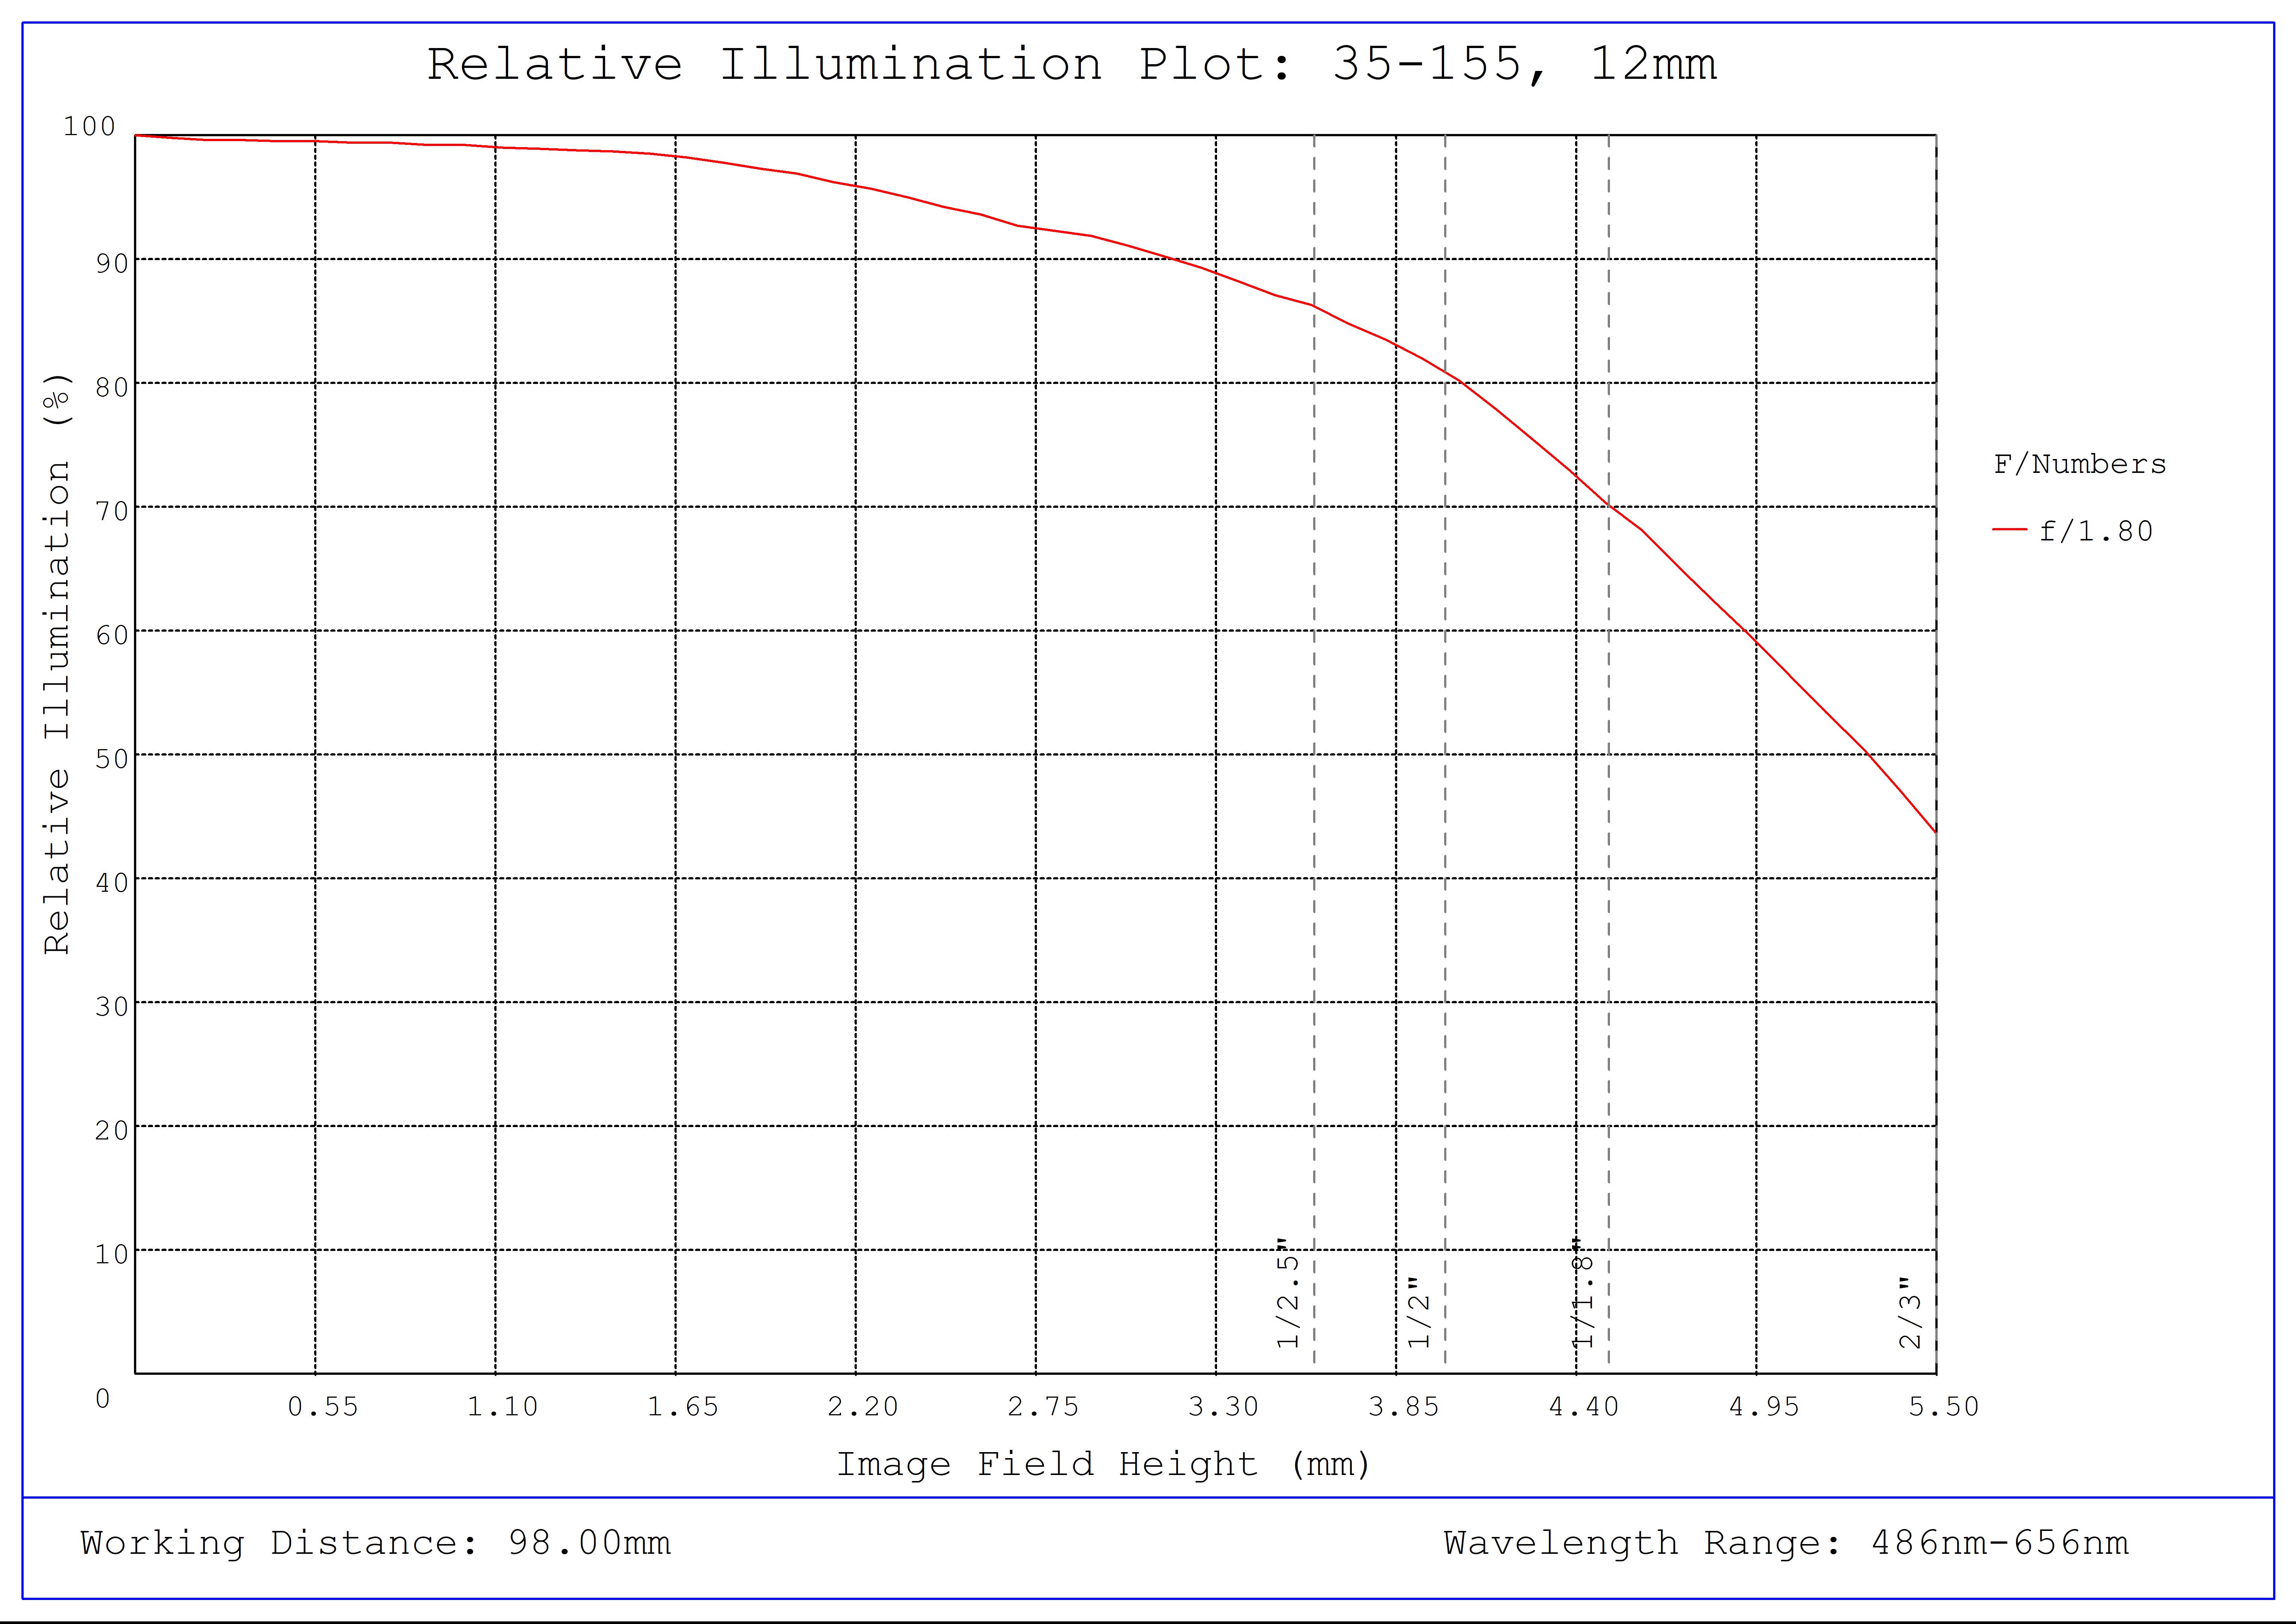 #35-155, 12mm, f/1.8 Cr Series Fixed Focal Length Lens, Relative Illumination Plot